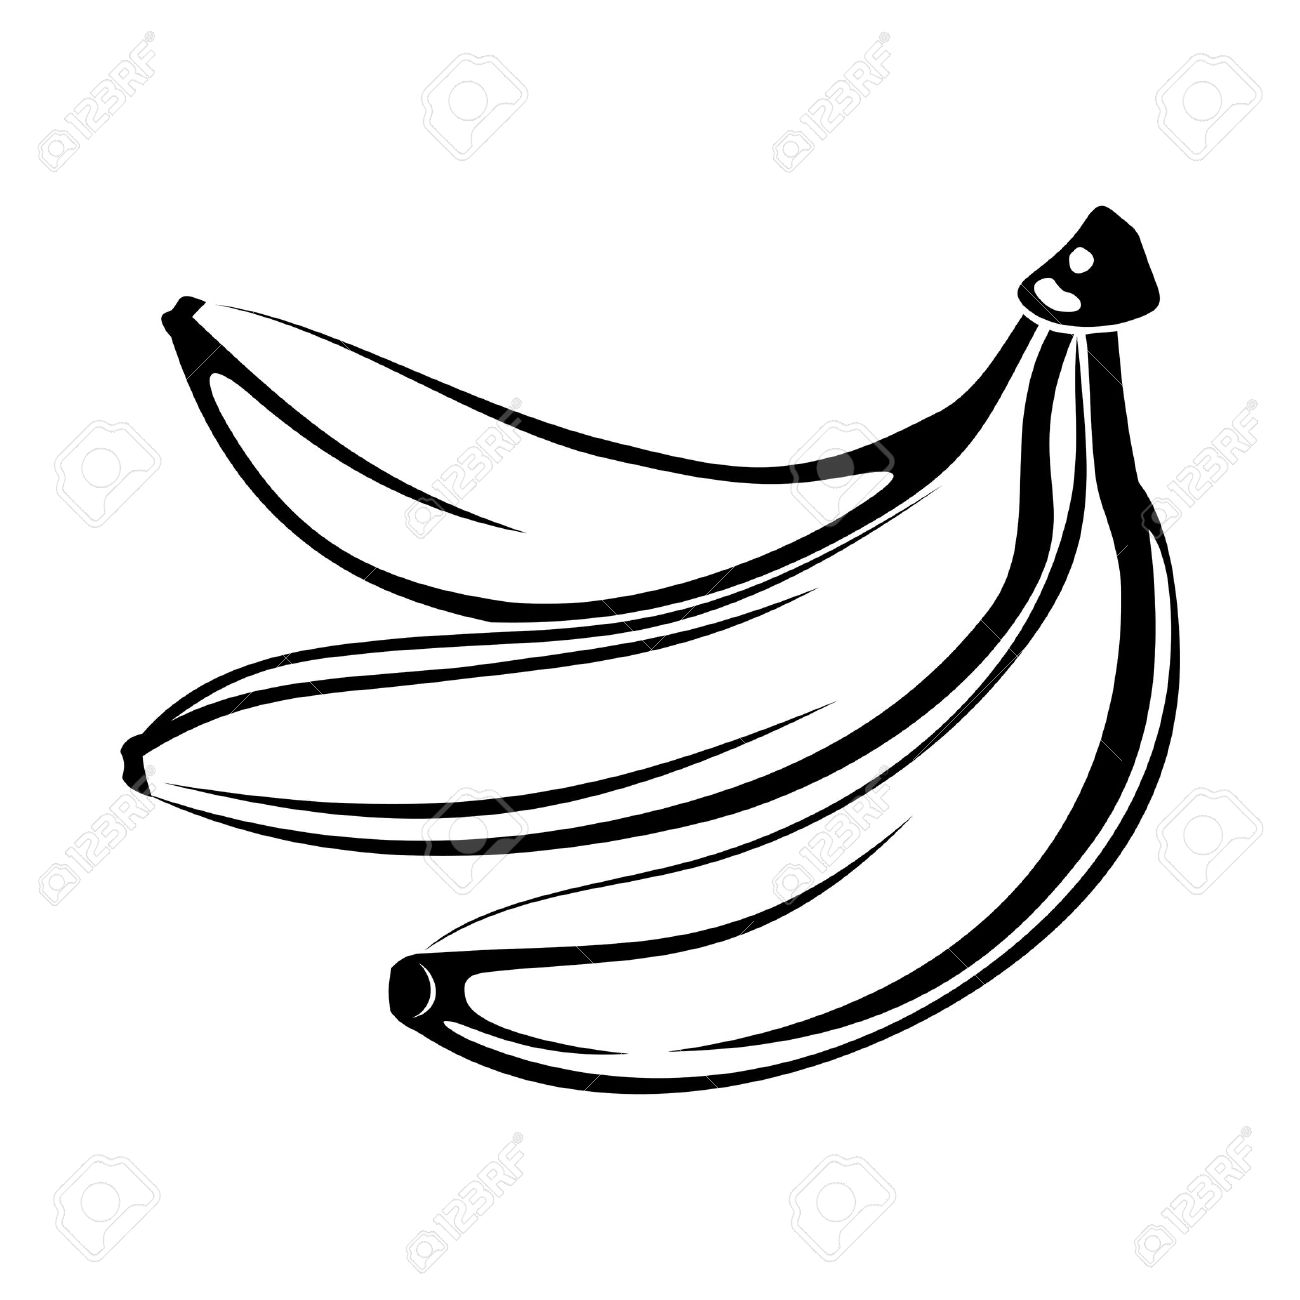 Banana clipart silhouette.